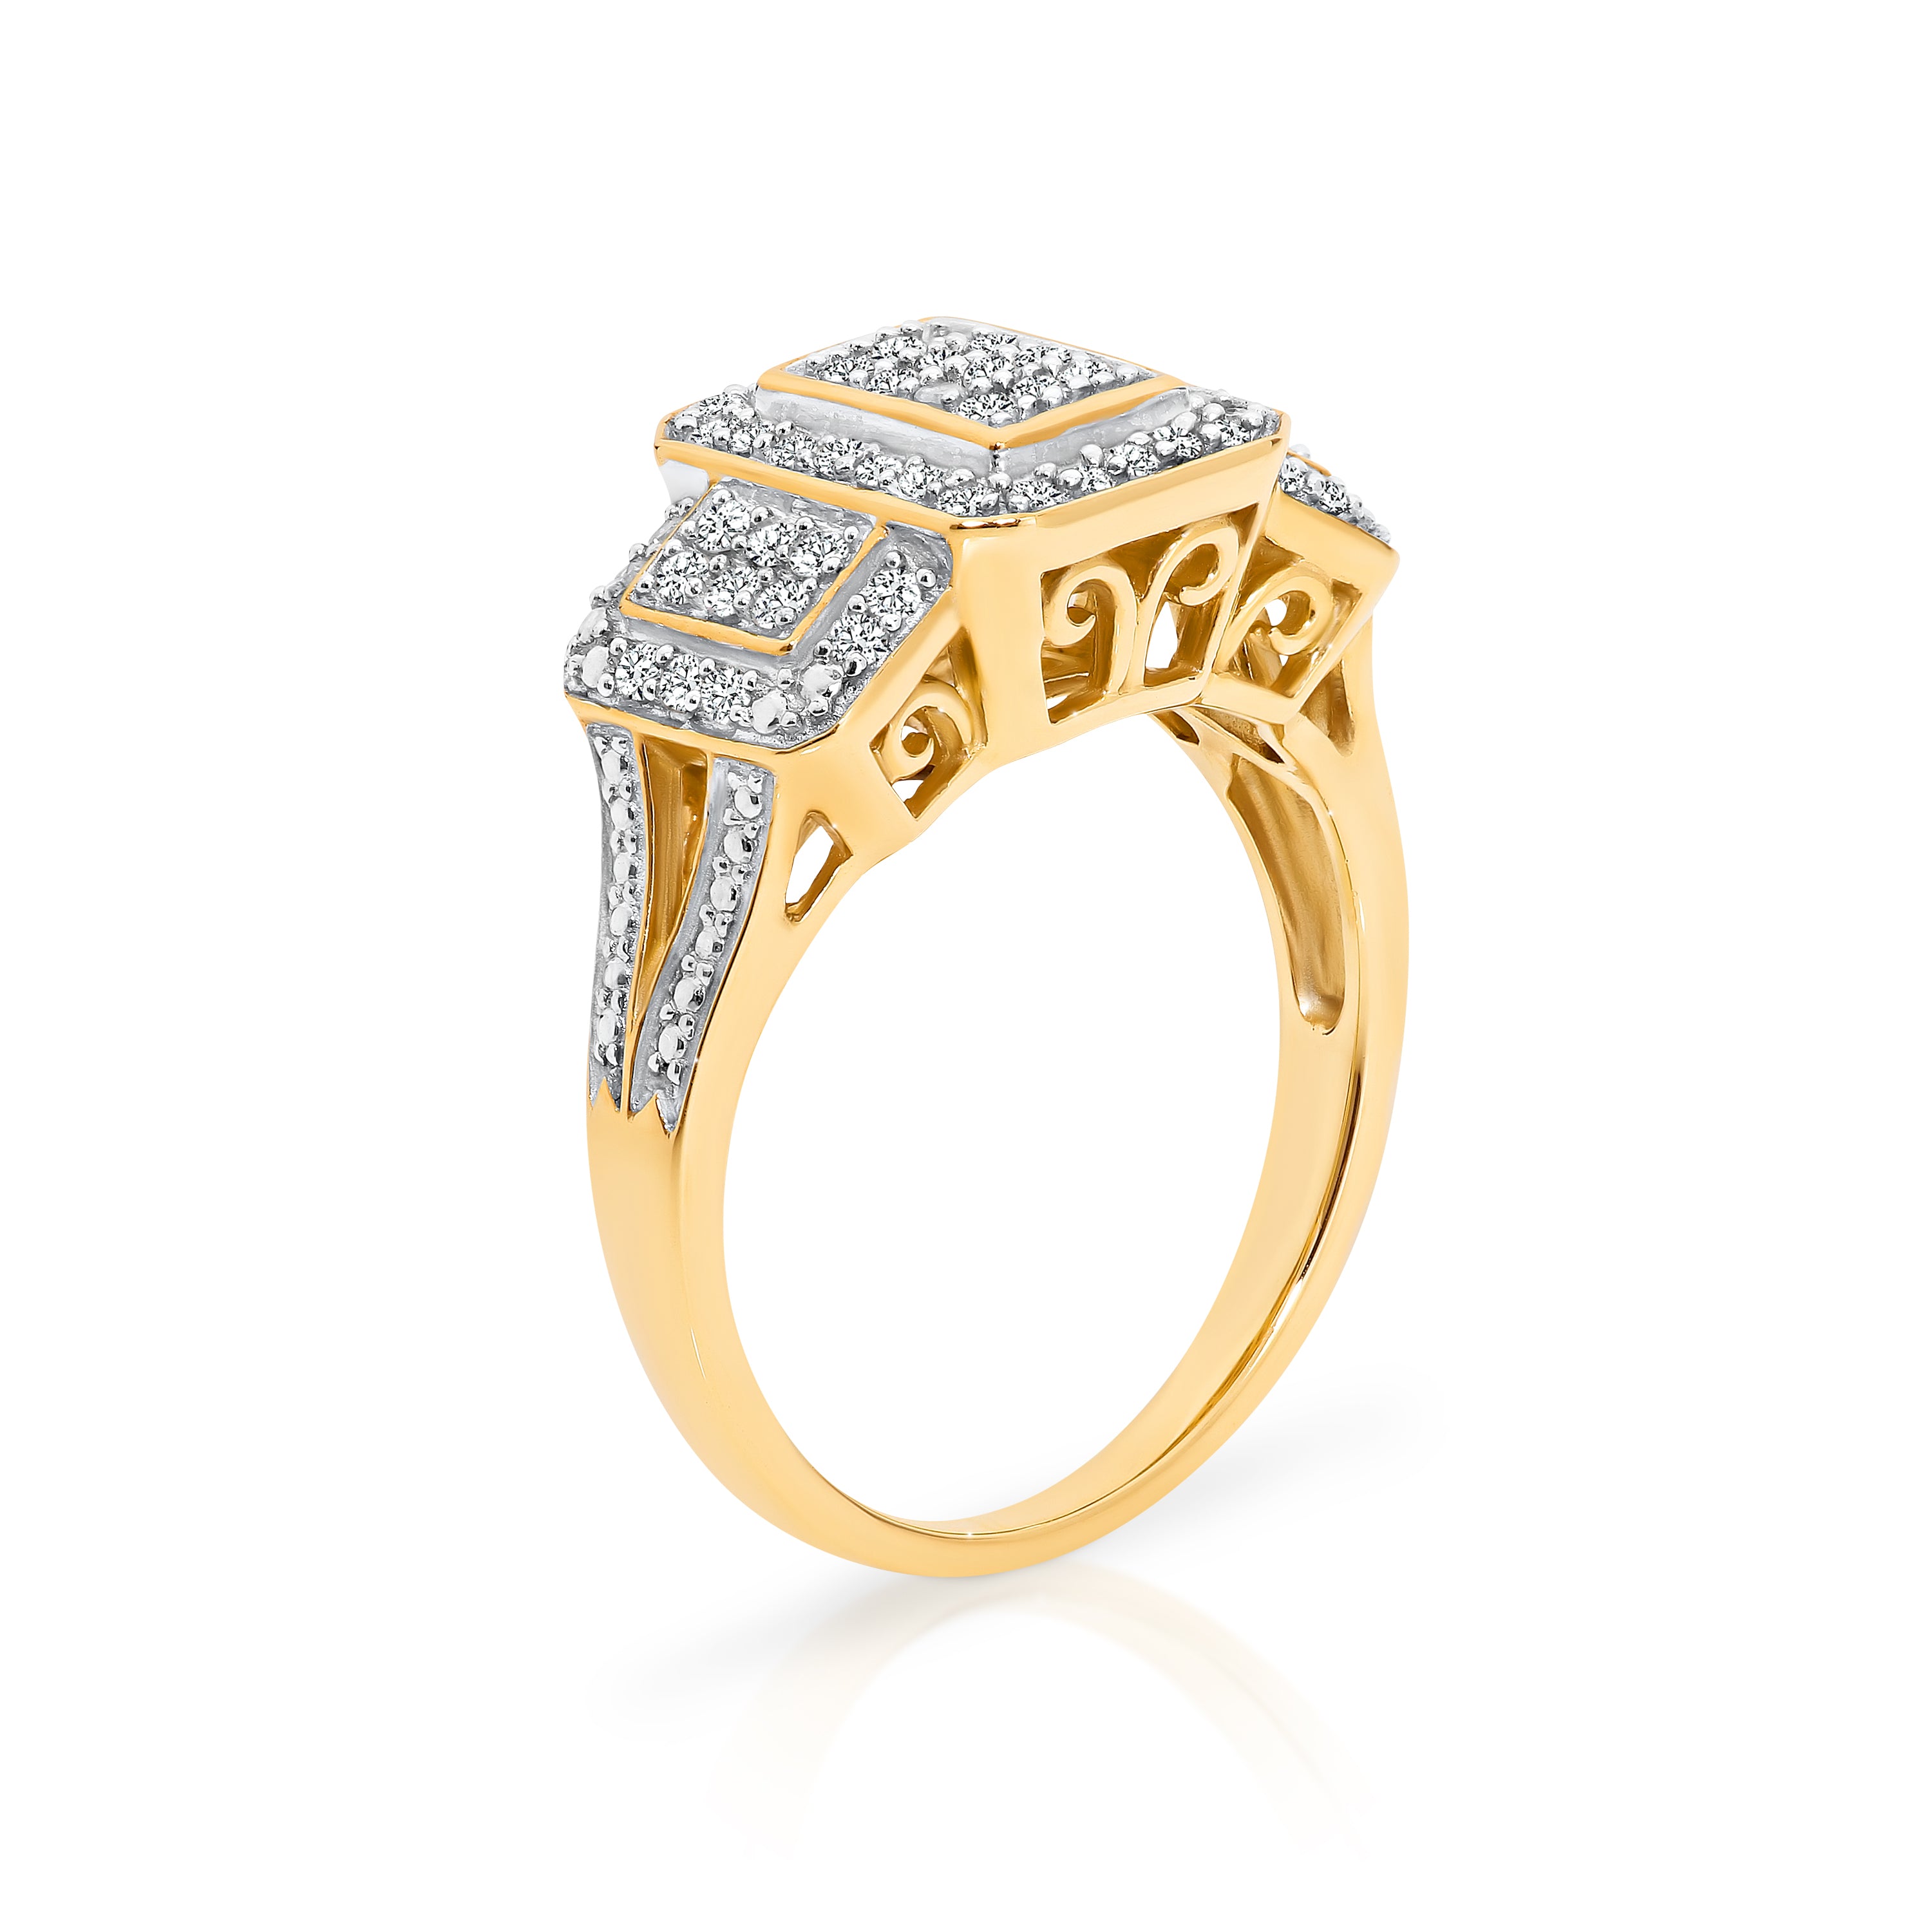 9ct Yellow Gold Diamond Dress Ring 1/2ct TW